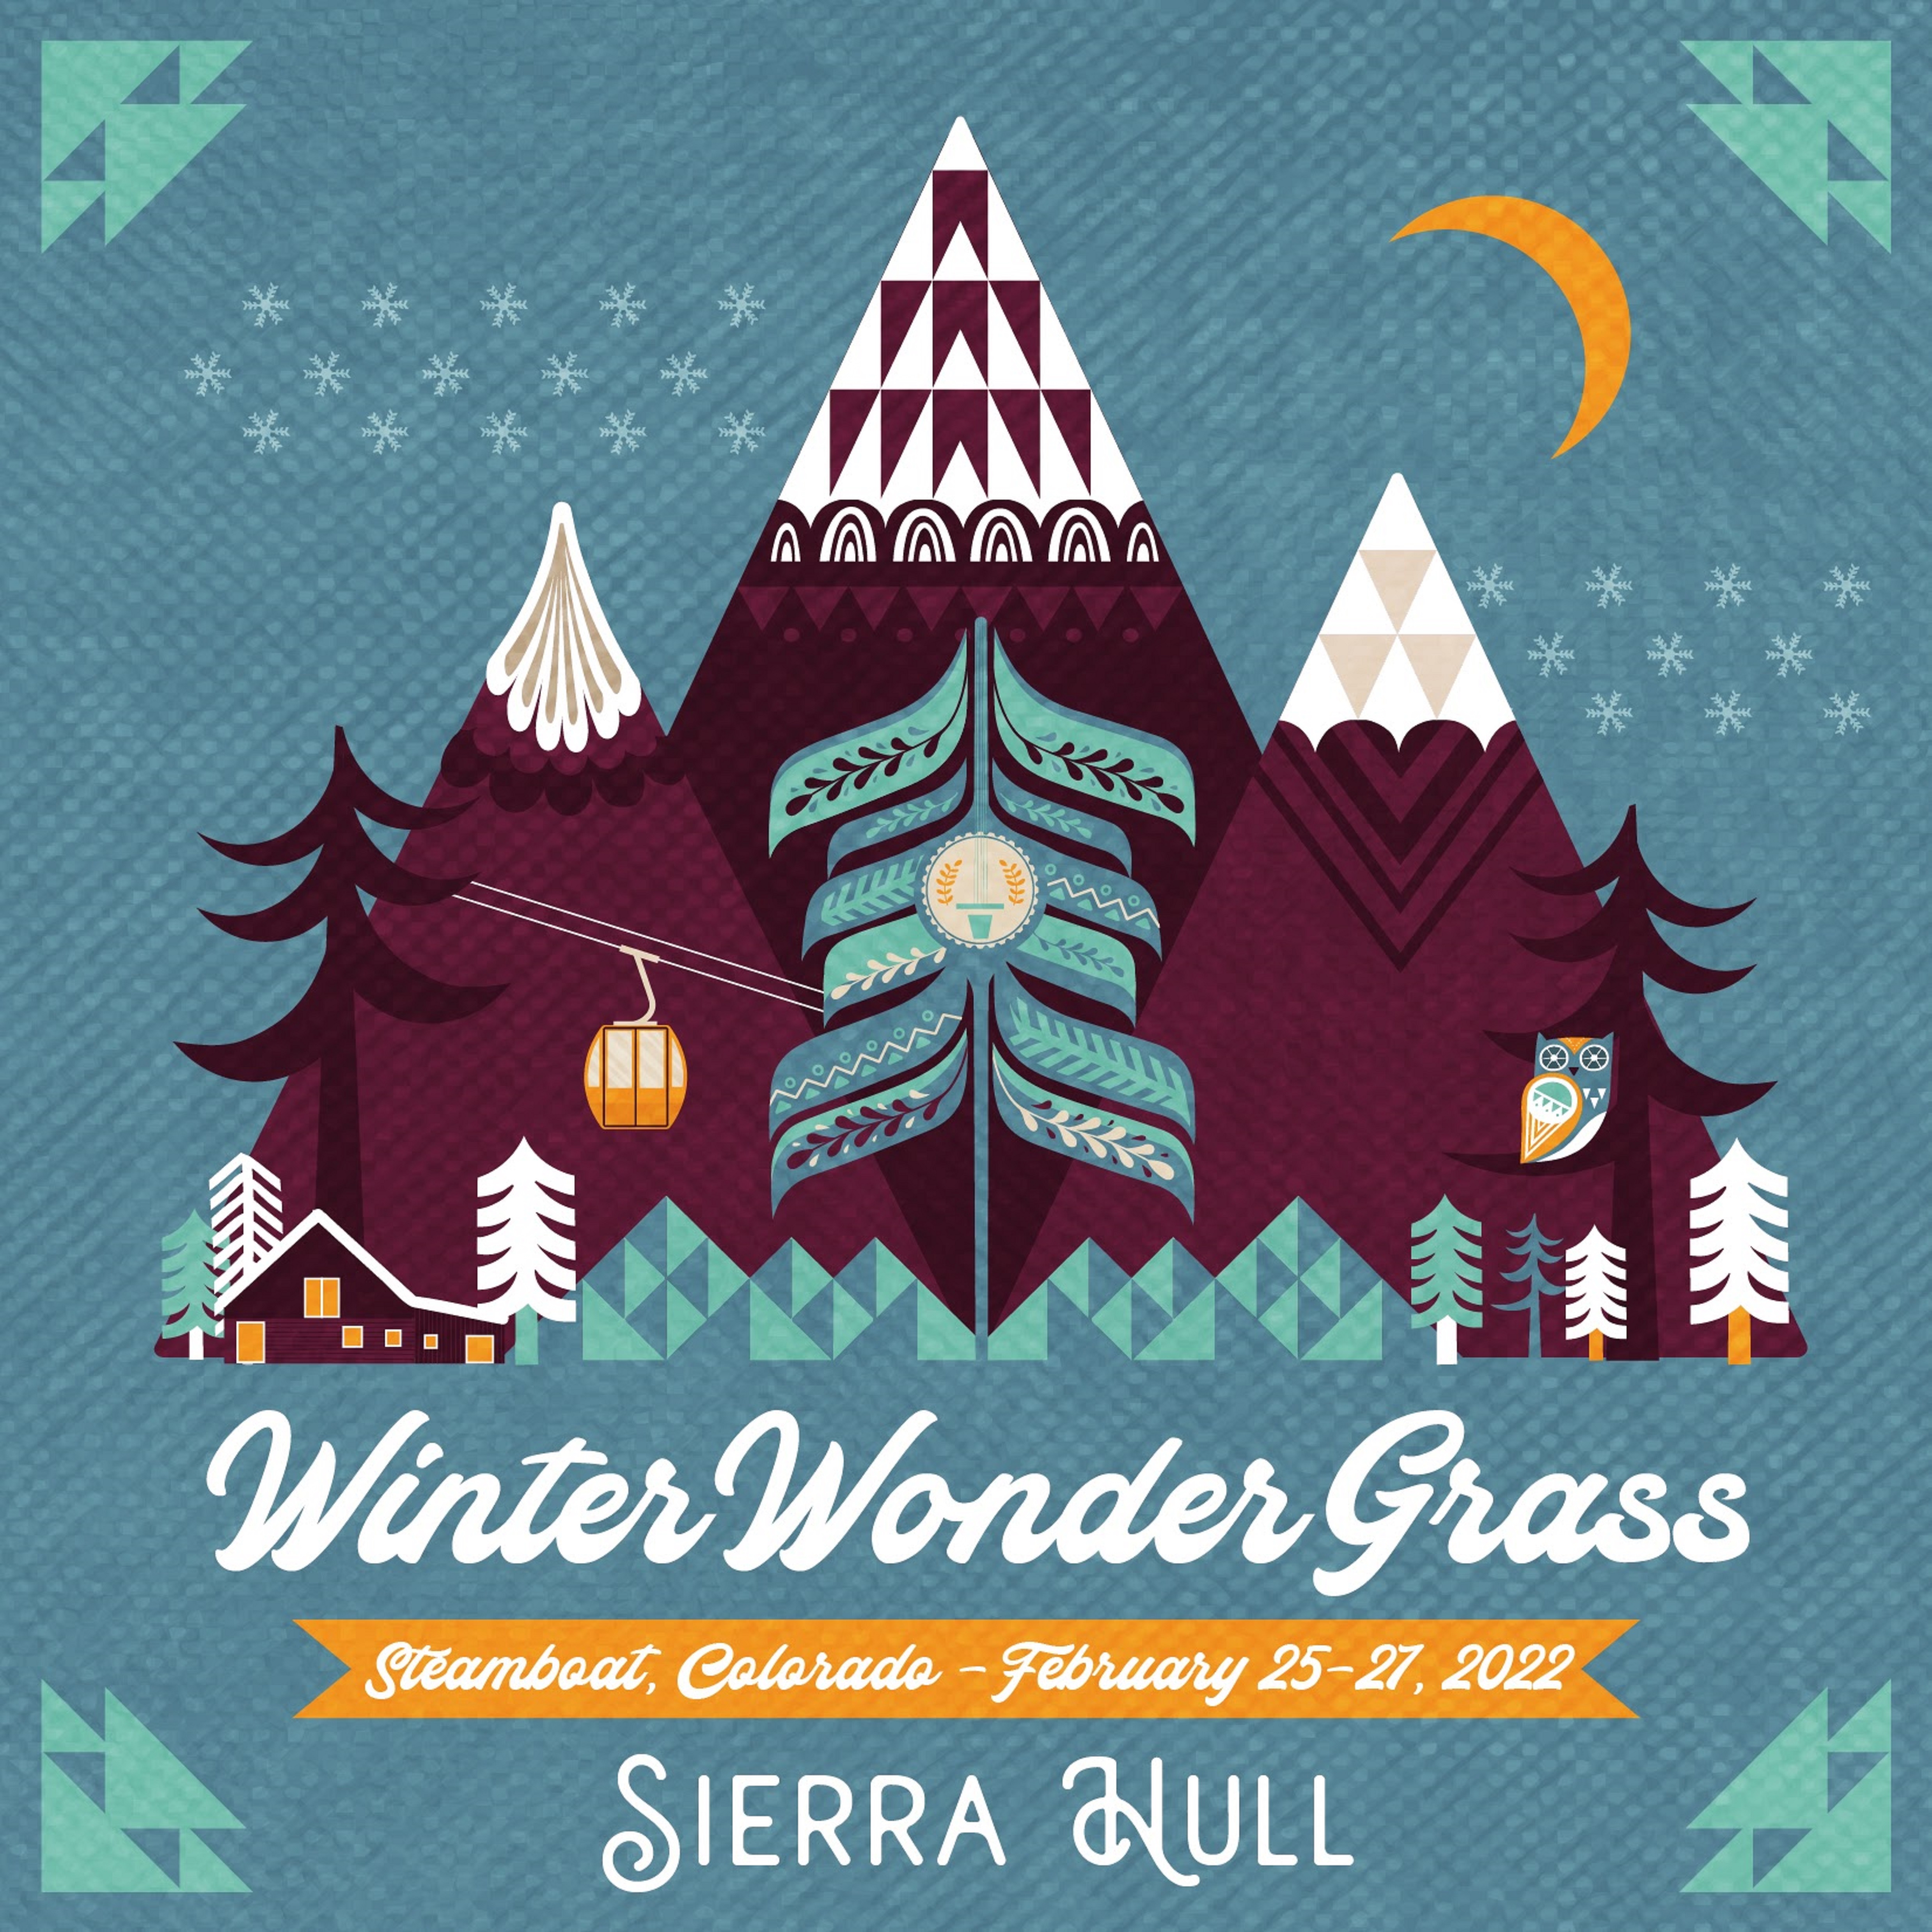 Sierra Hull Added to WinterWonderGrass, Single Day River Trips Announced